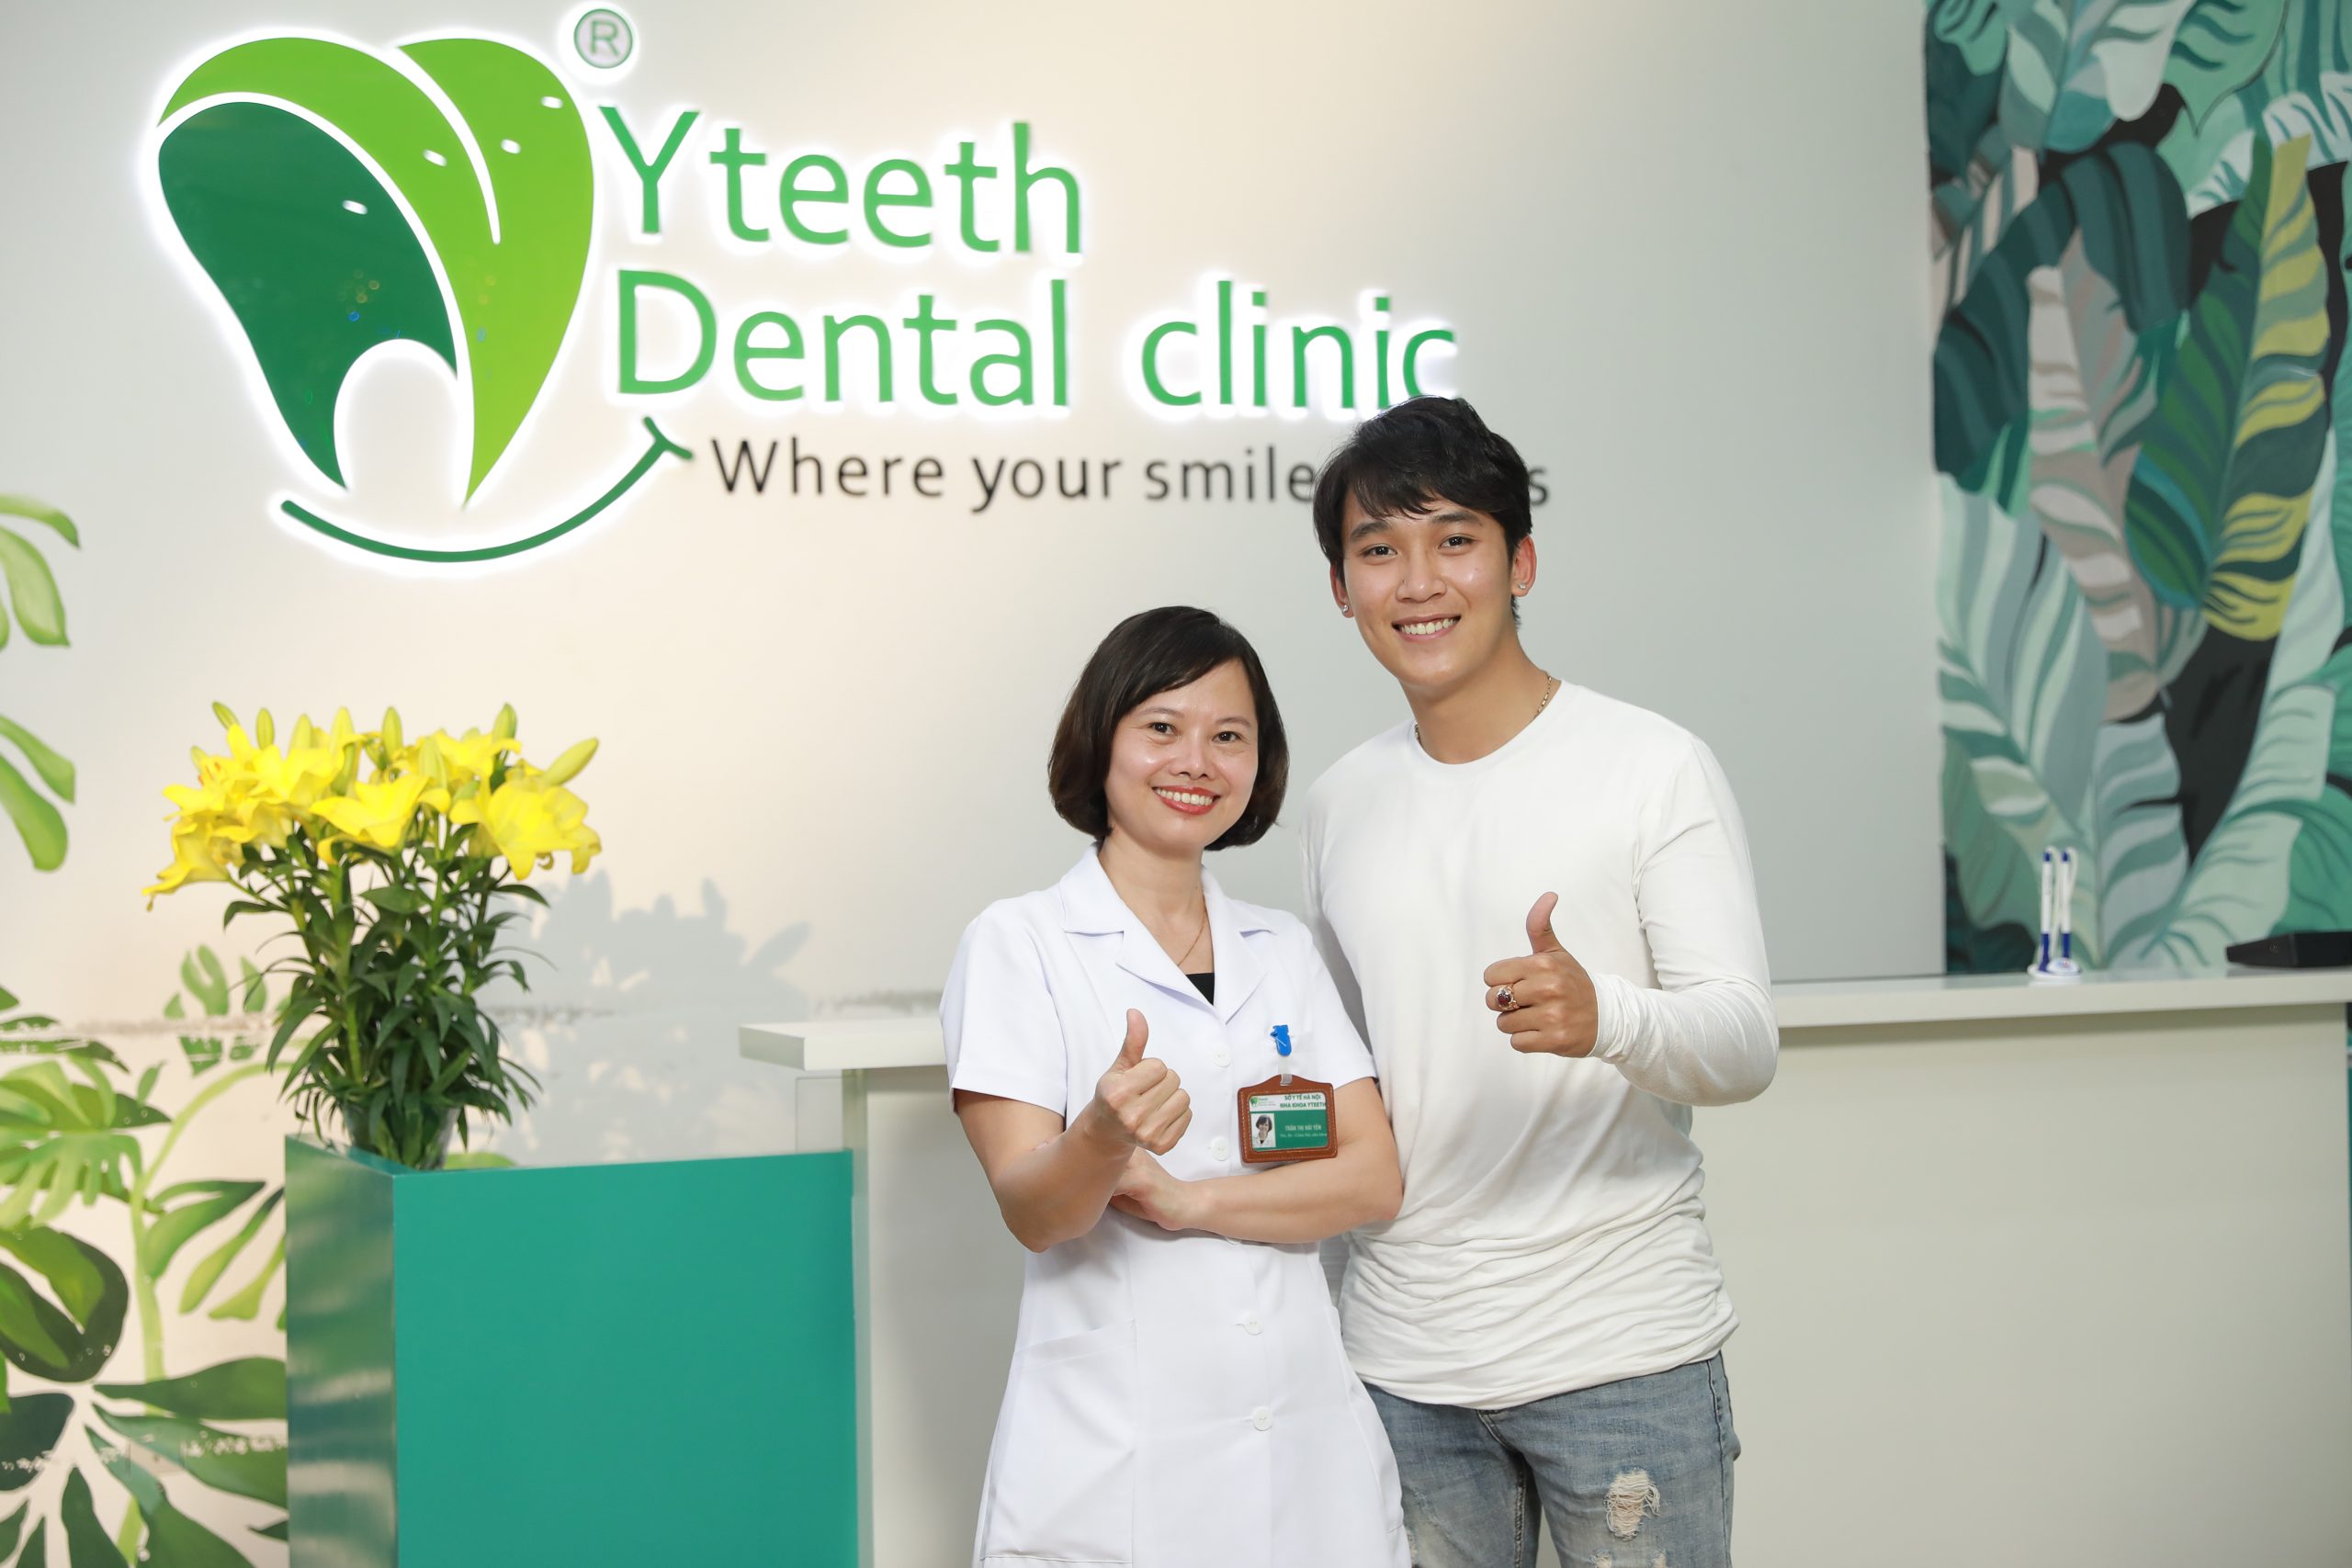 Dr. Hải Yến Yteeth - Nha khoa Yteeth